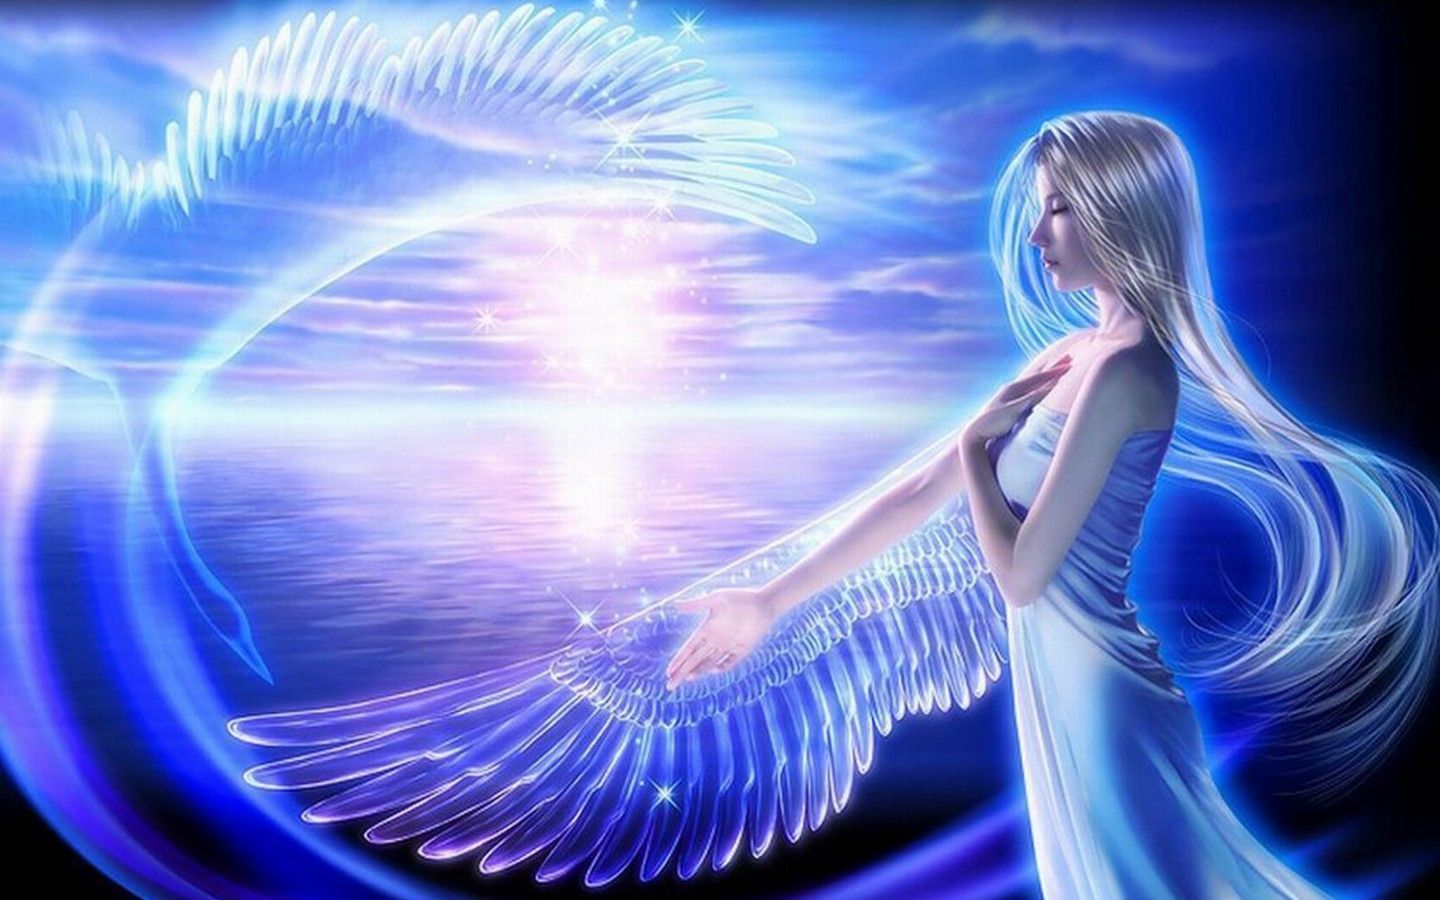 fantasy women desktop wallpaper. blue fantasy women wallpaper beautiful fantasy women dream wallpaper. Fantasy girl, Angel, Angel spirit